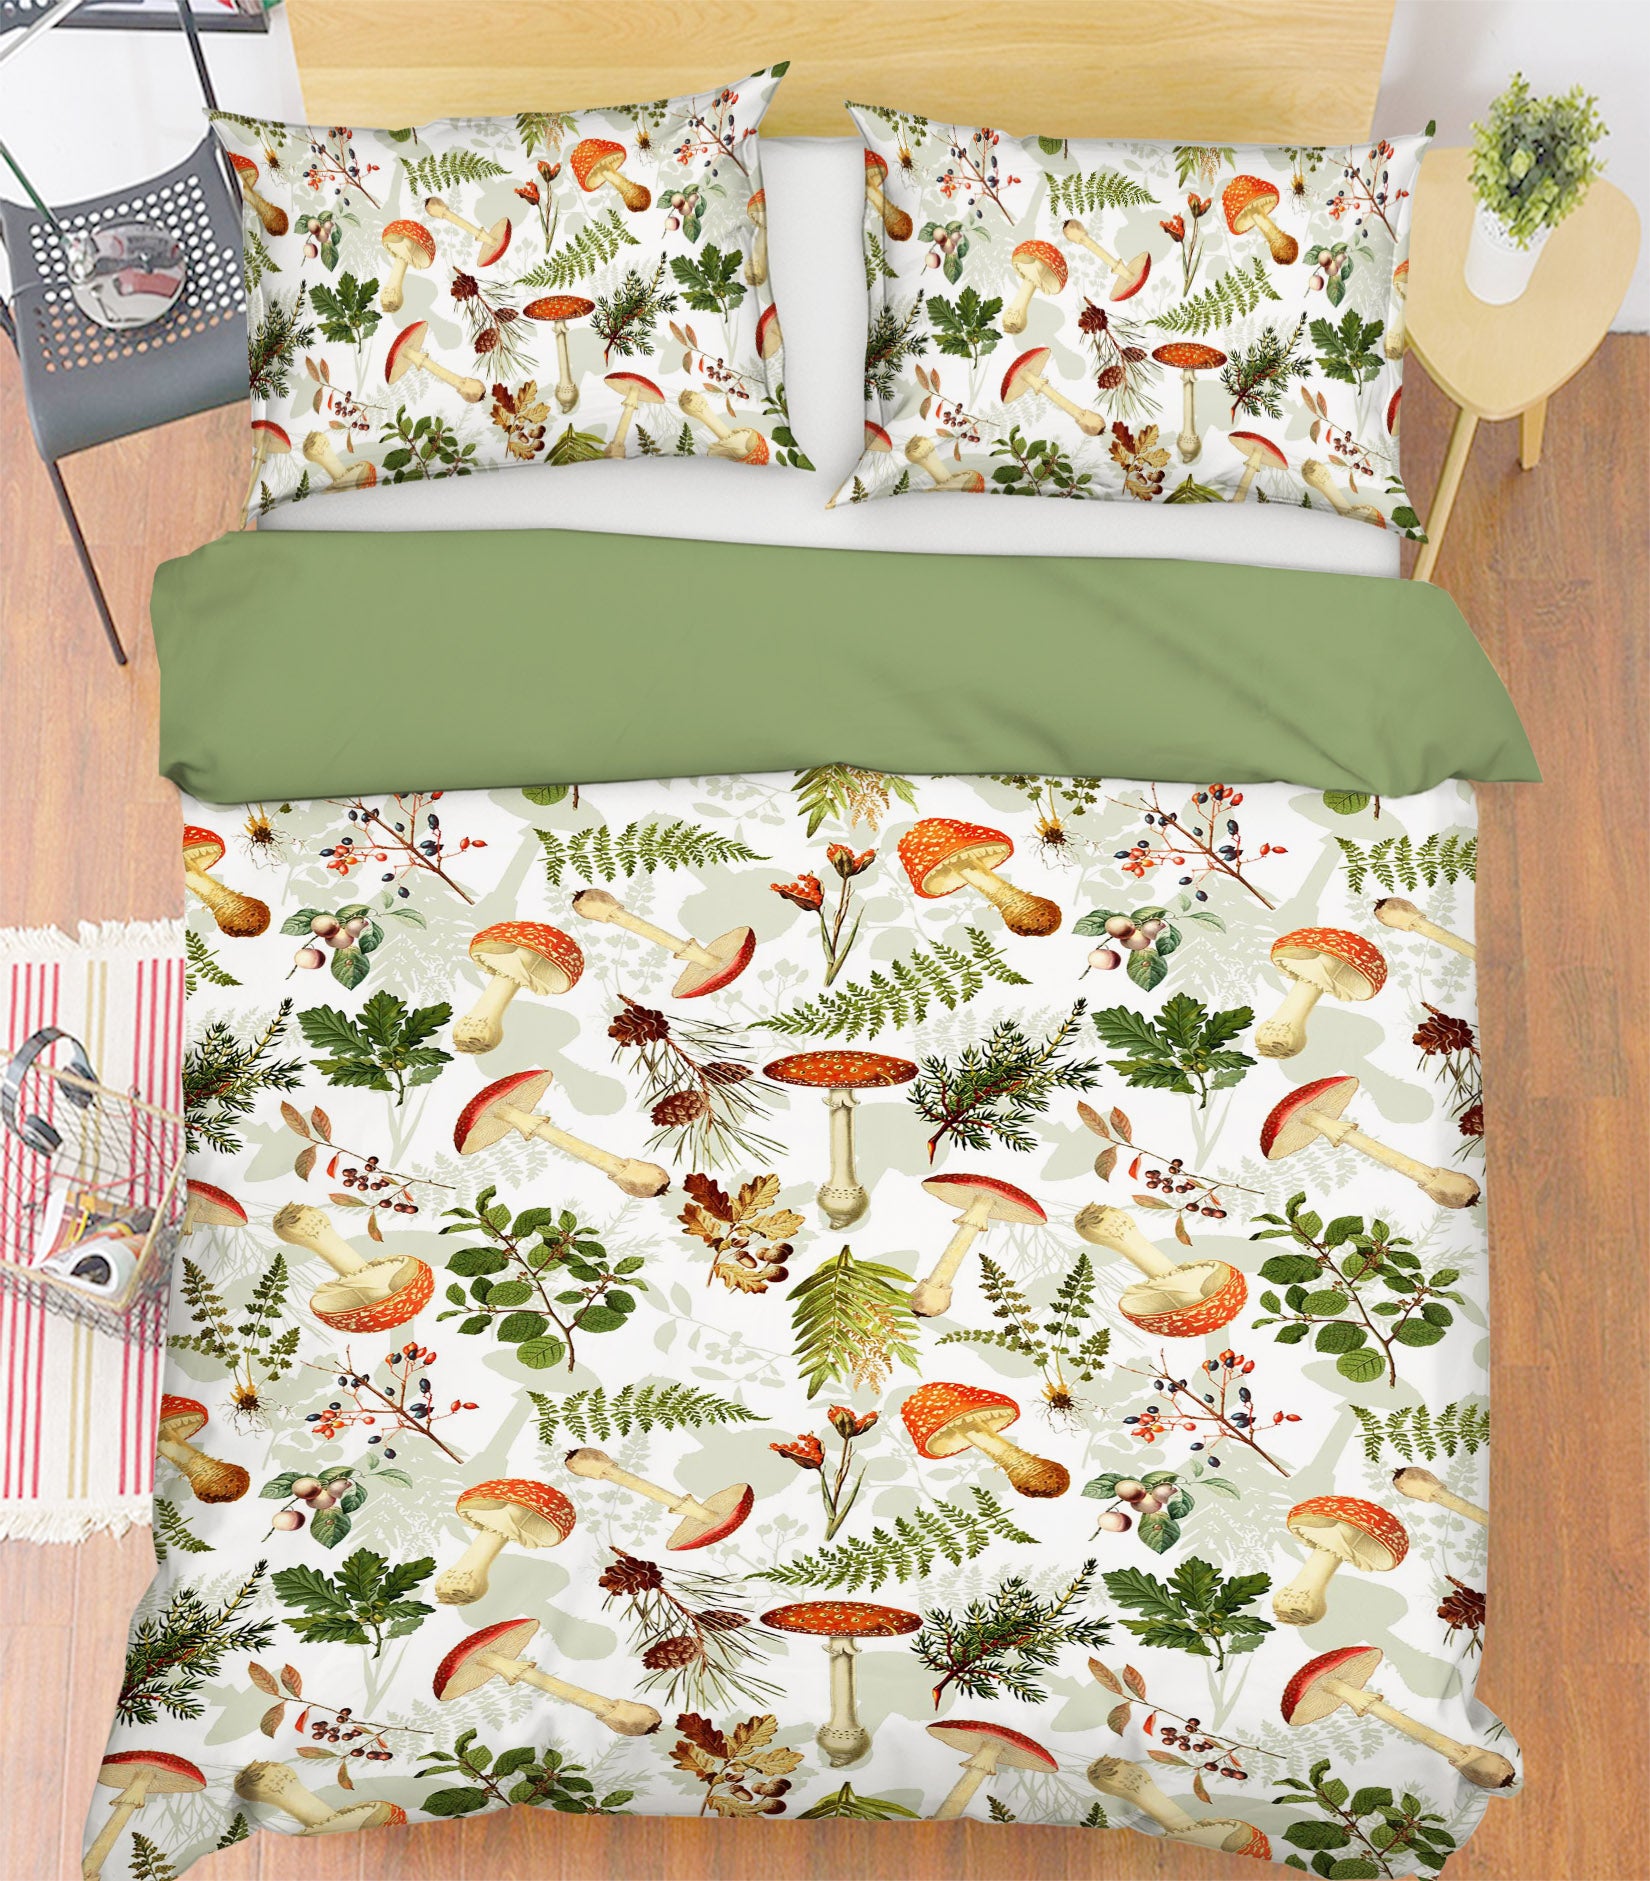 3D Red Mushroom 093 Uta Naumann Bedding Bed Pillowcases Quilt